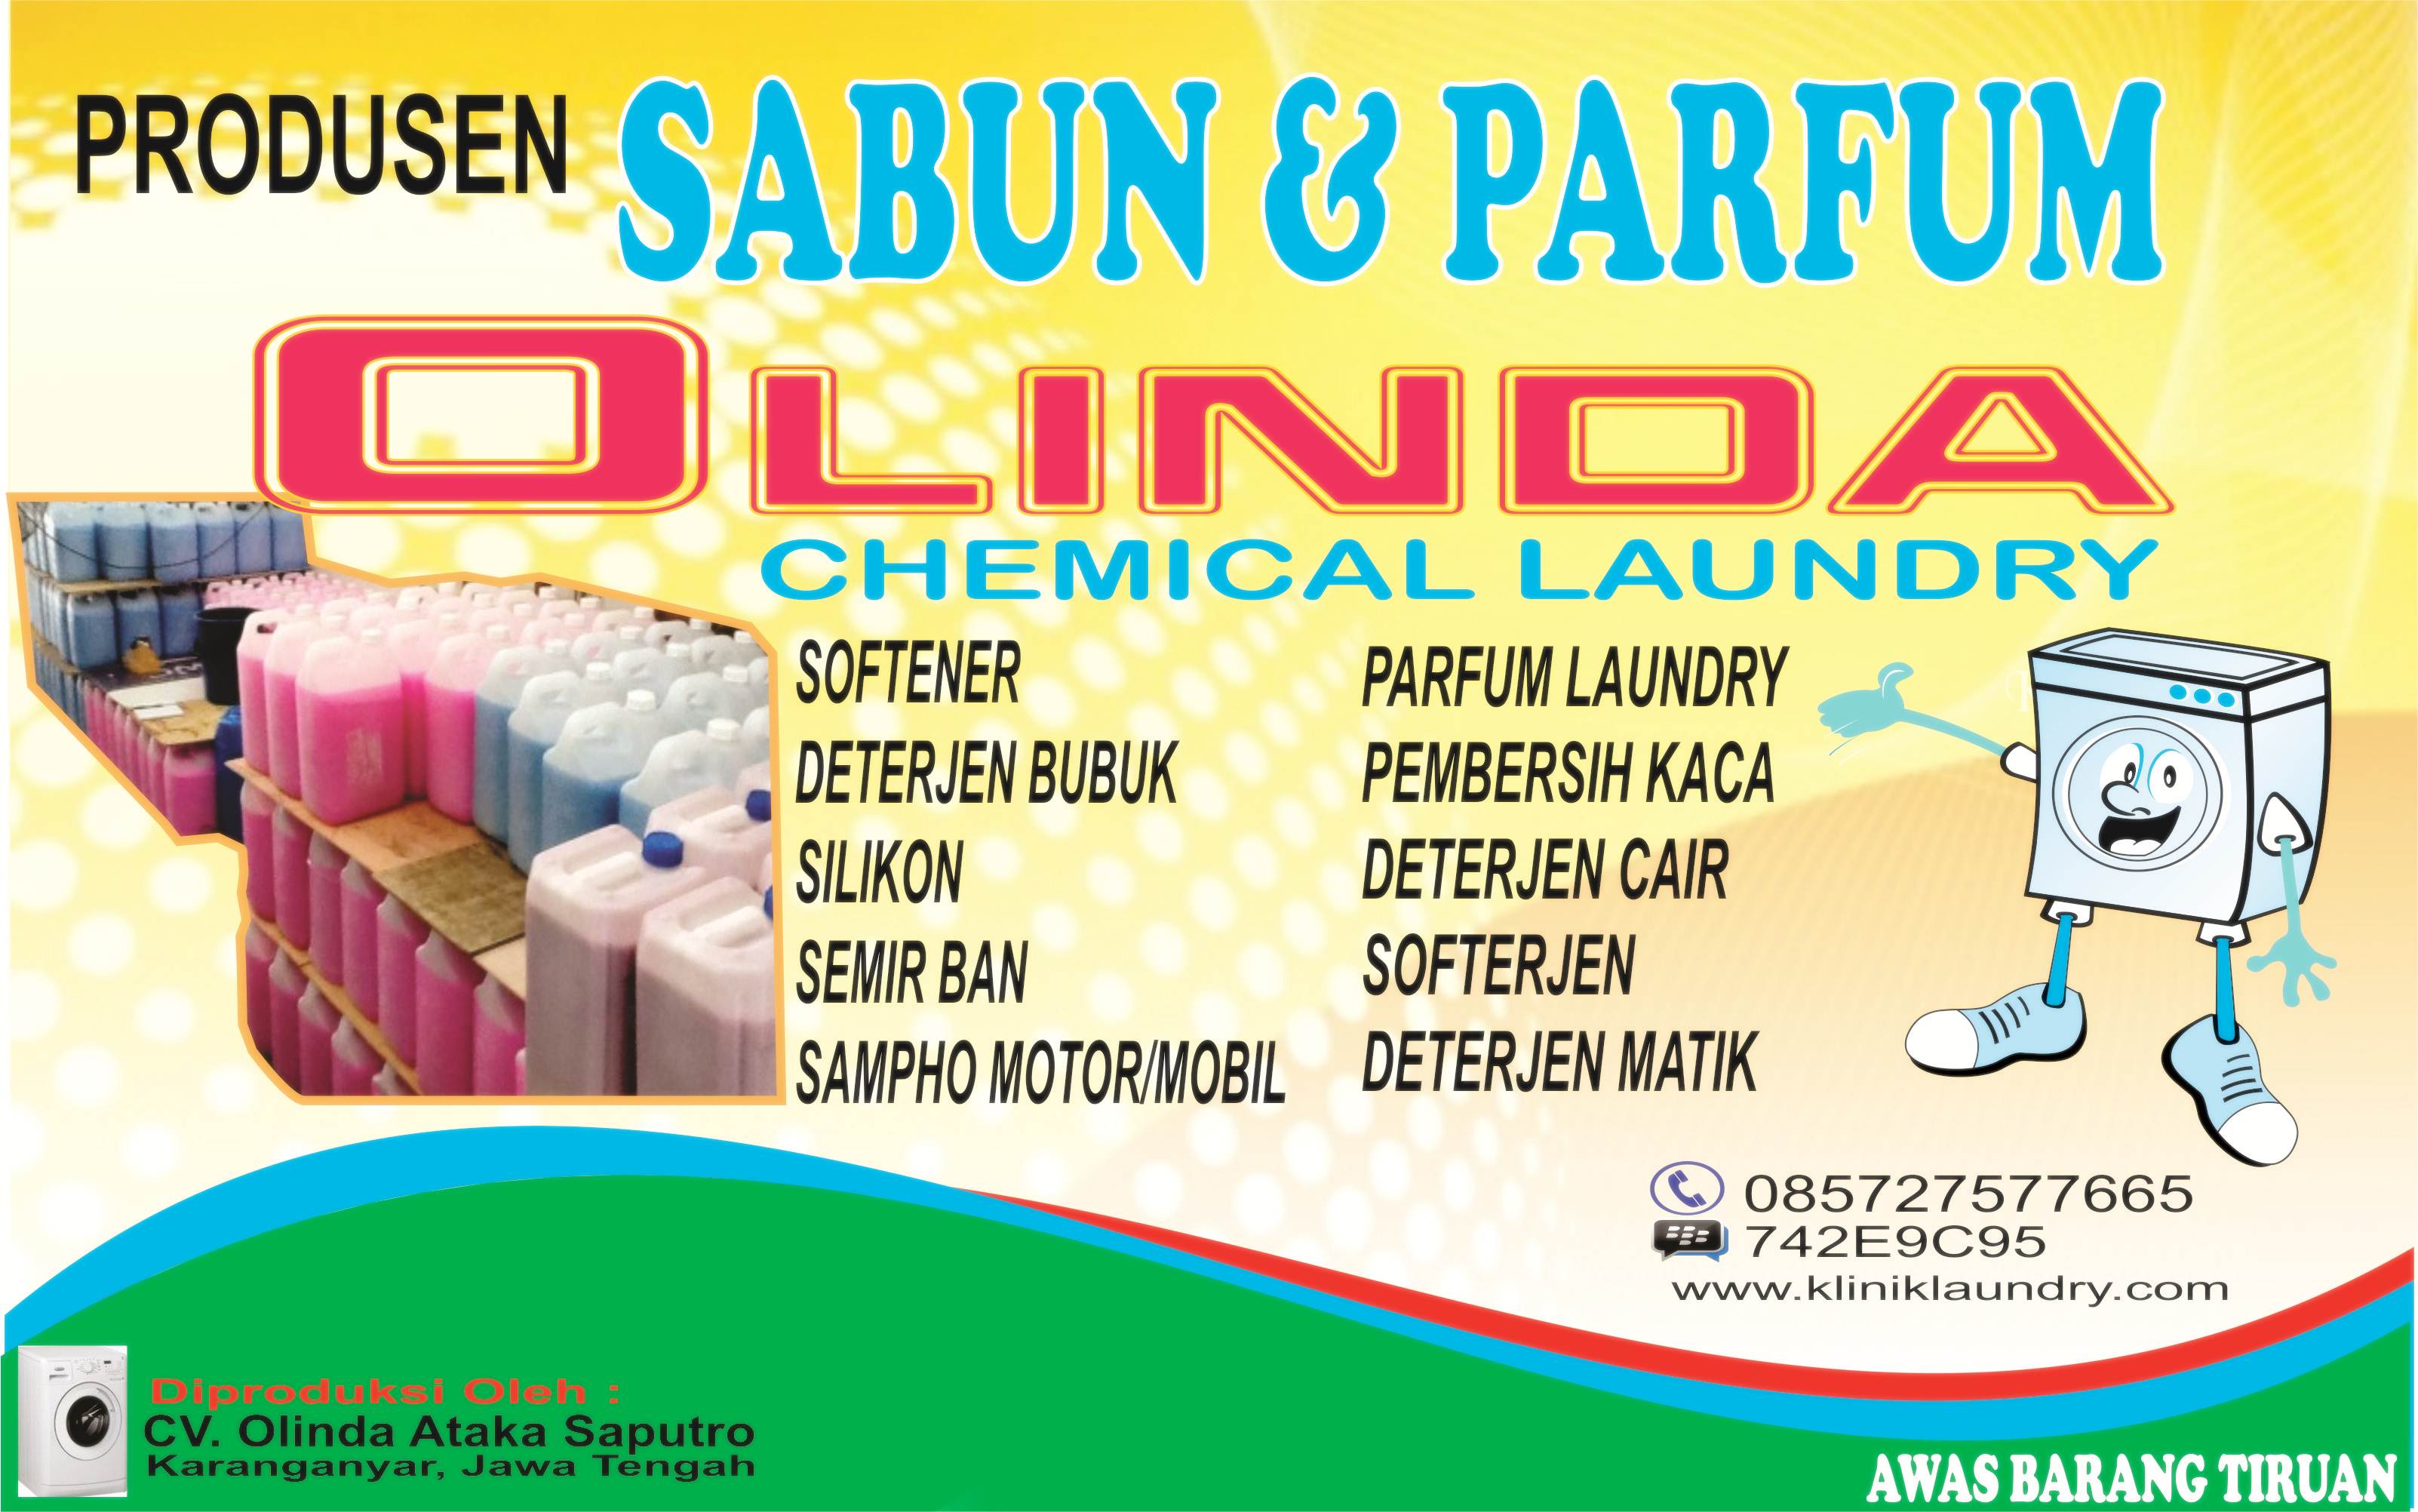 Kliniklaundry  Chemical & Equipment Supplier laundry 